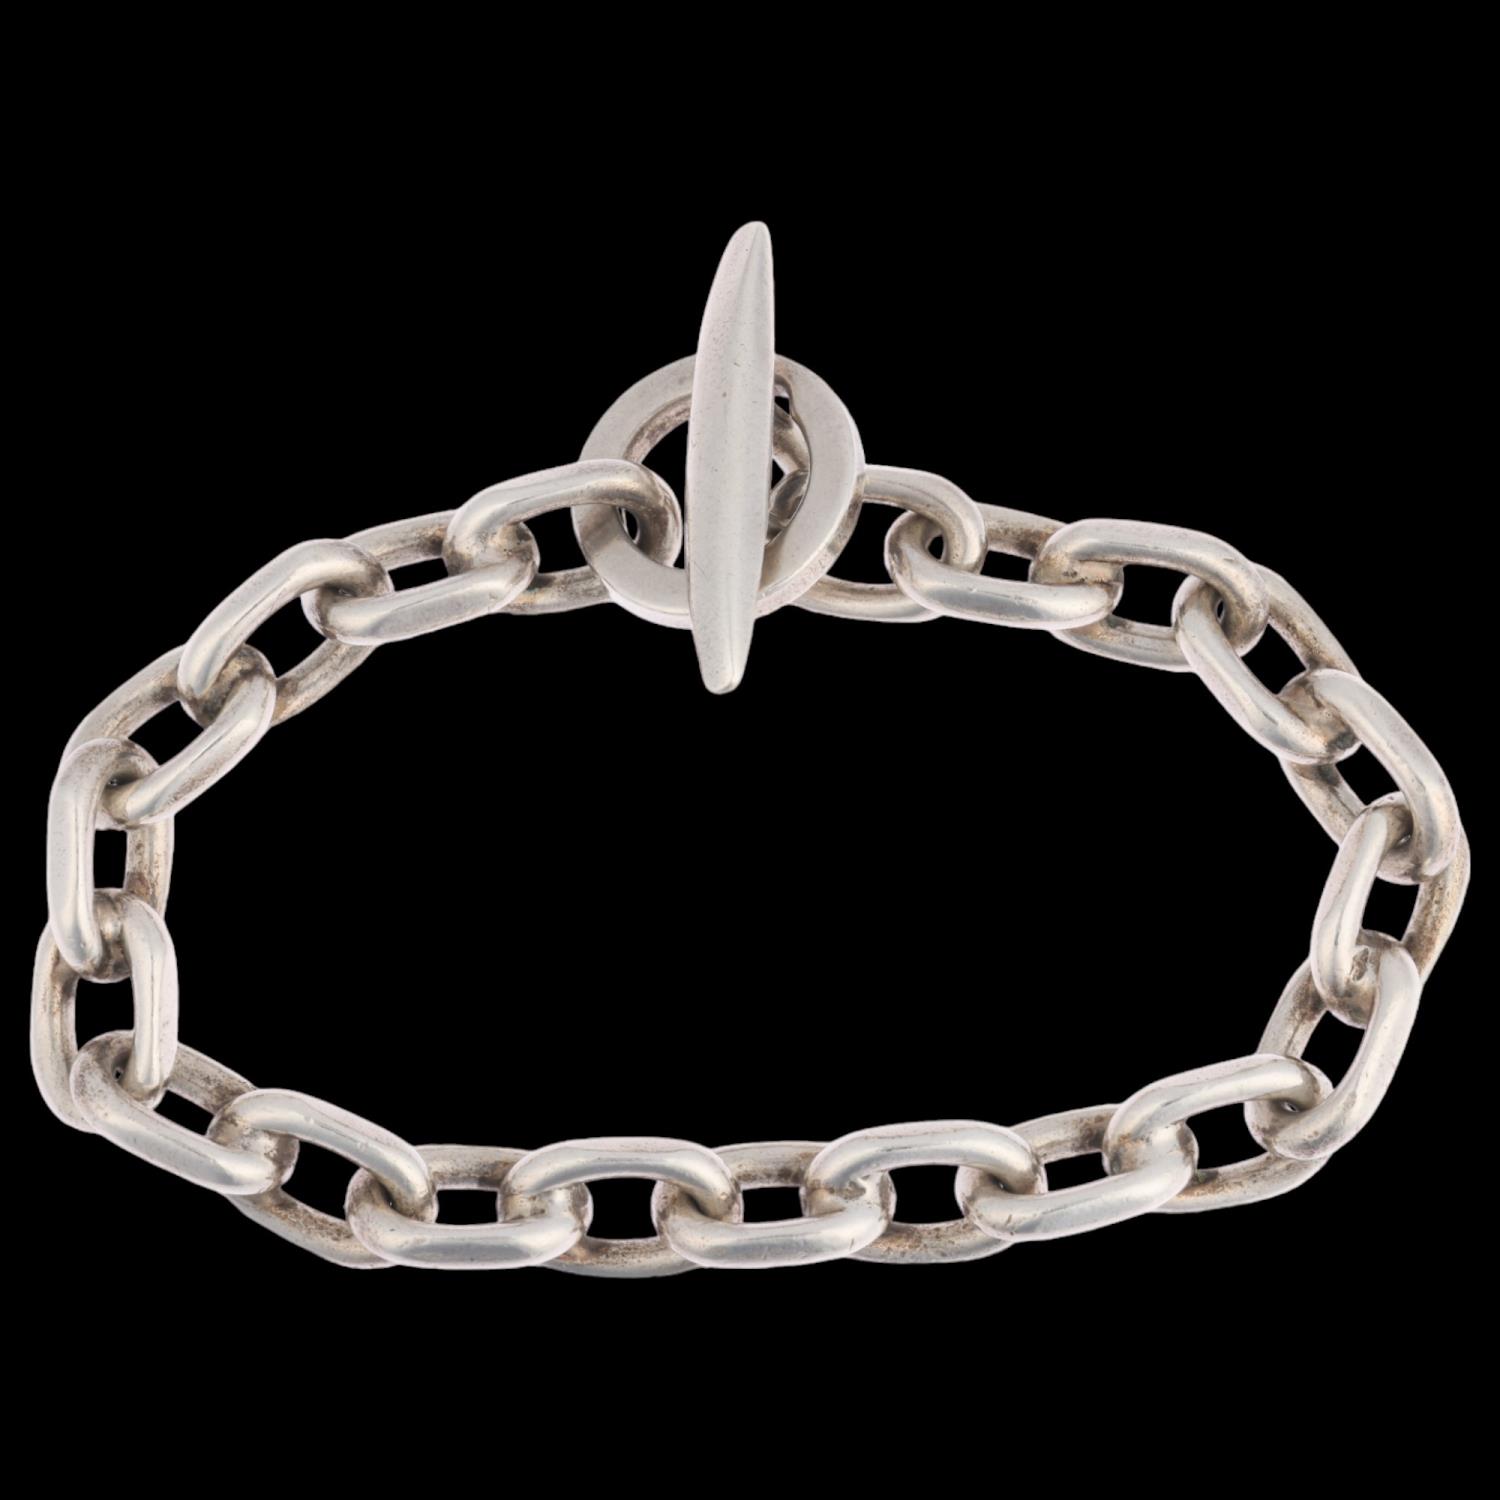 RANDERS SOLVVAREFABRIK - a heavy Danish sterling silver anchor cable link chain bracelet, 20.5cm,